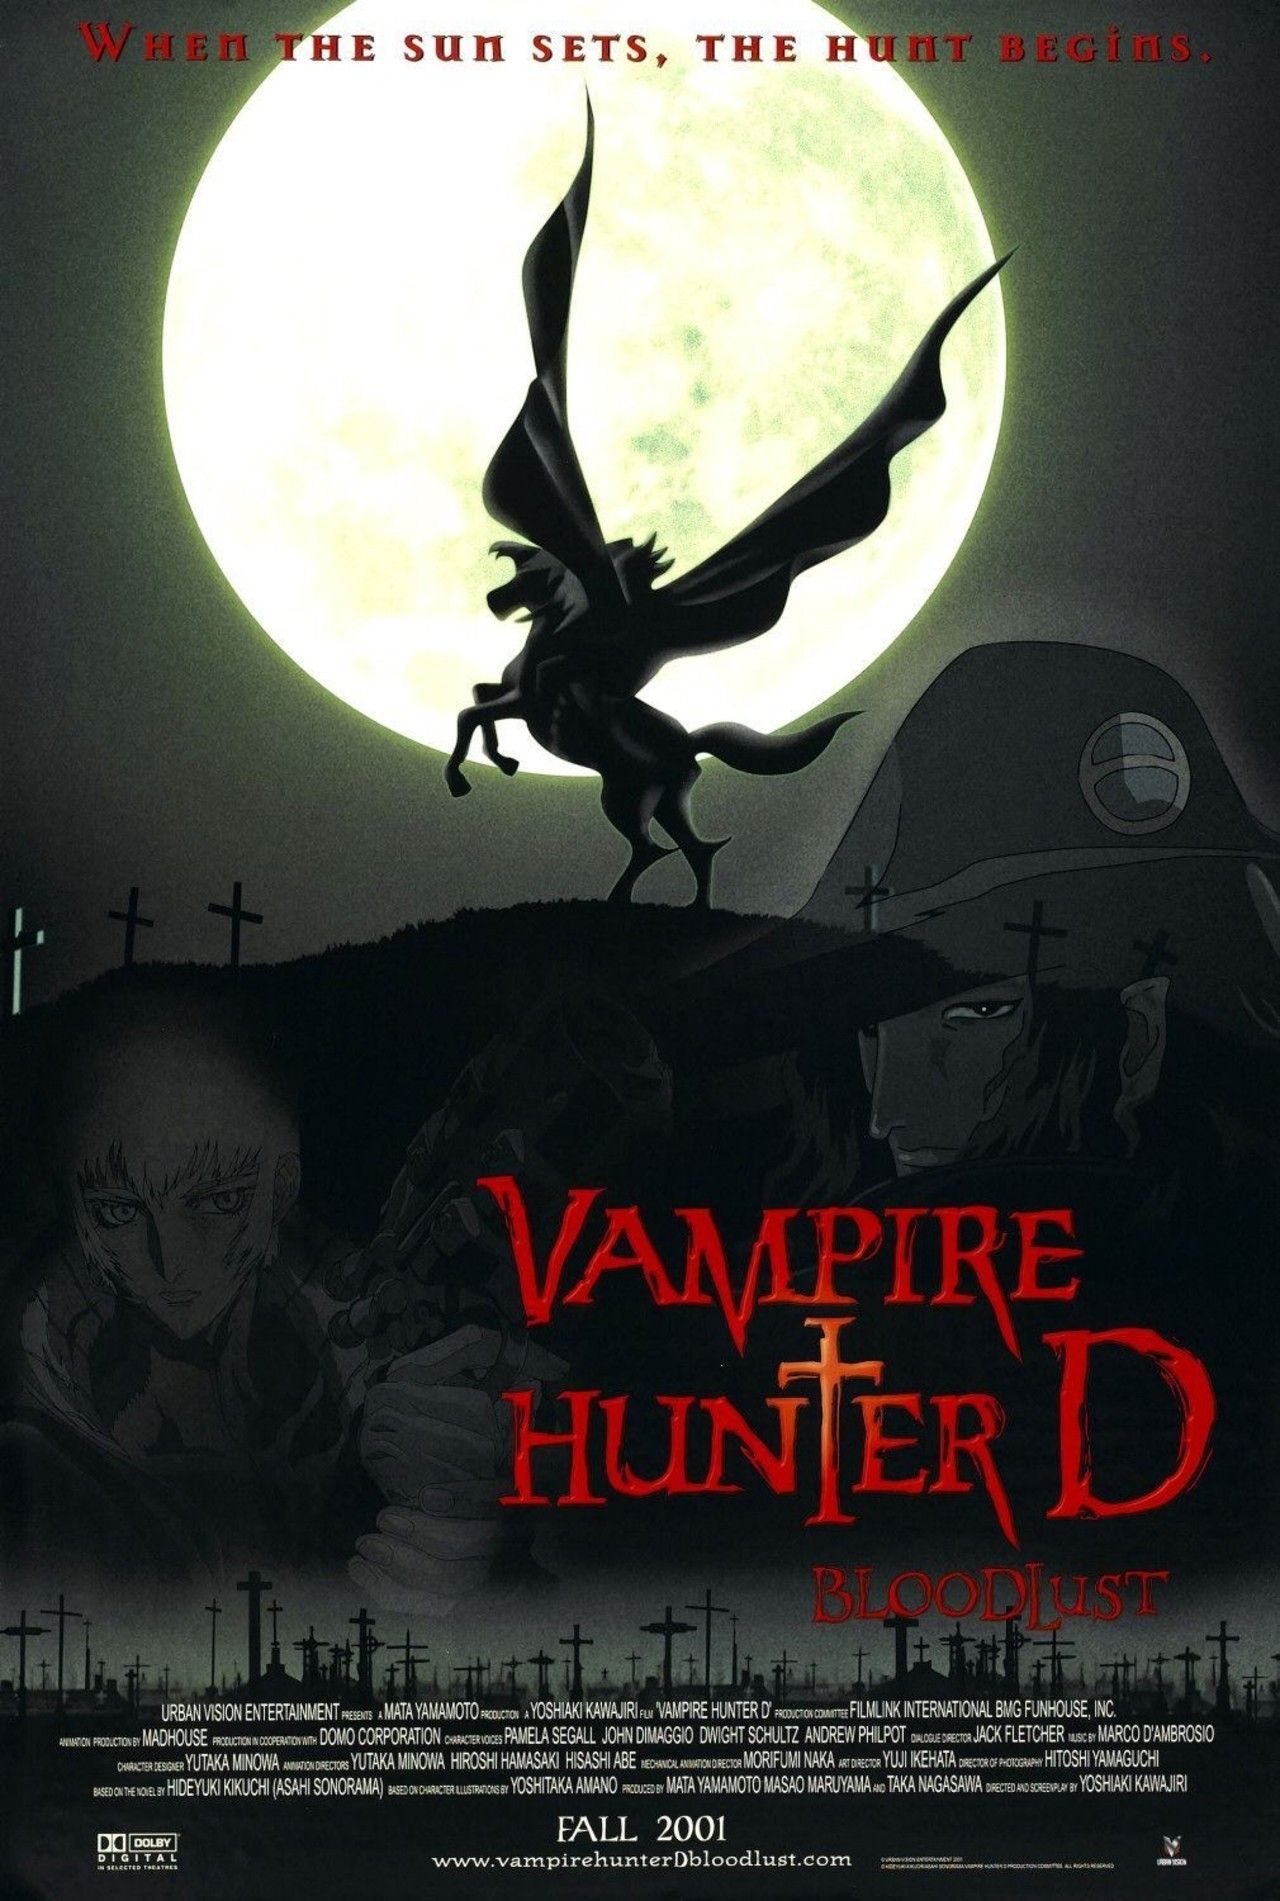 Vampire Hunter D Bloodlust Animation Cel, in Tommy S's Vampire